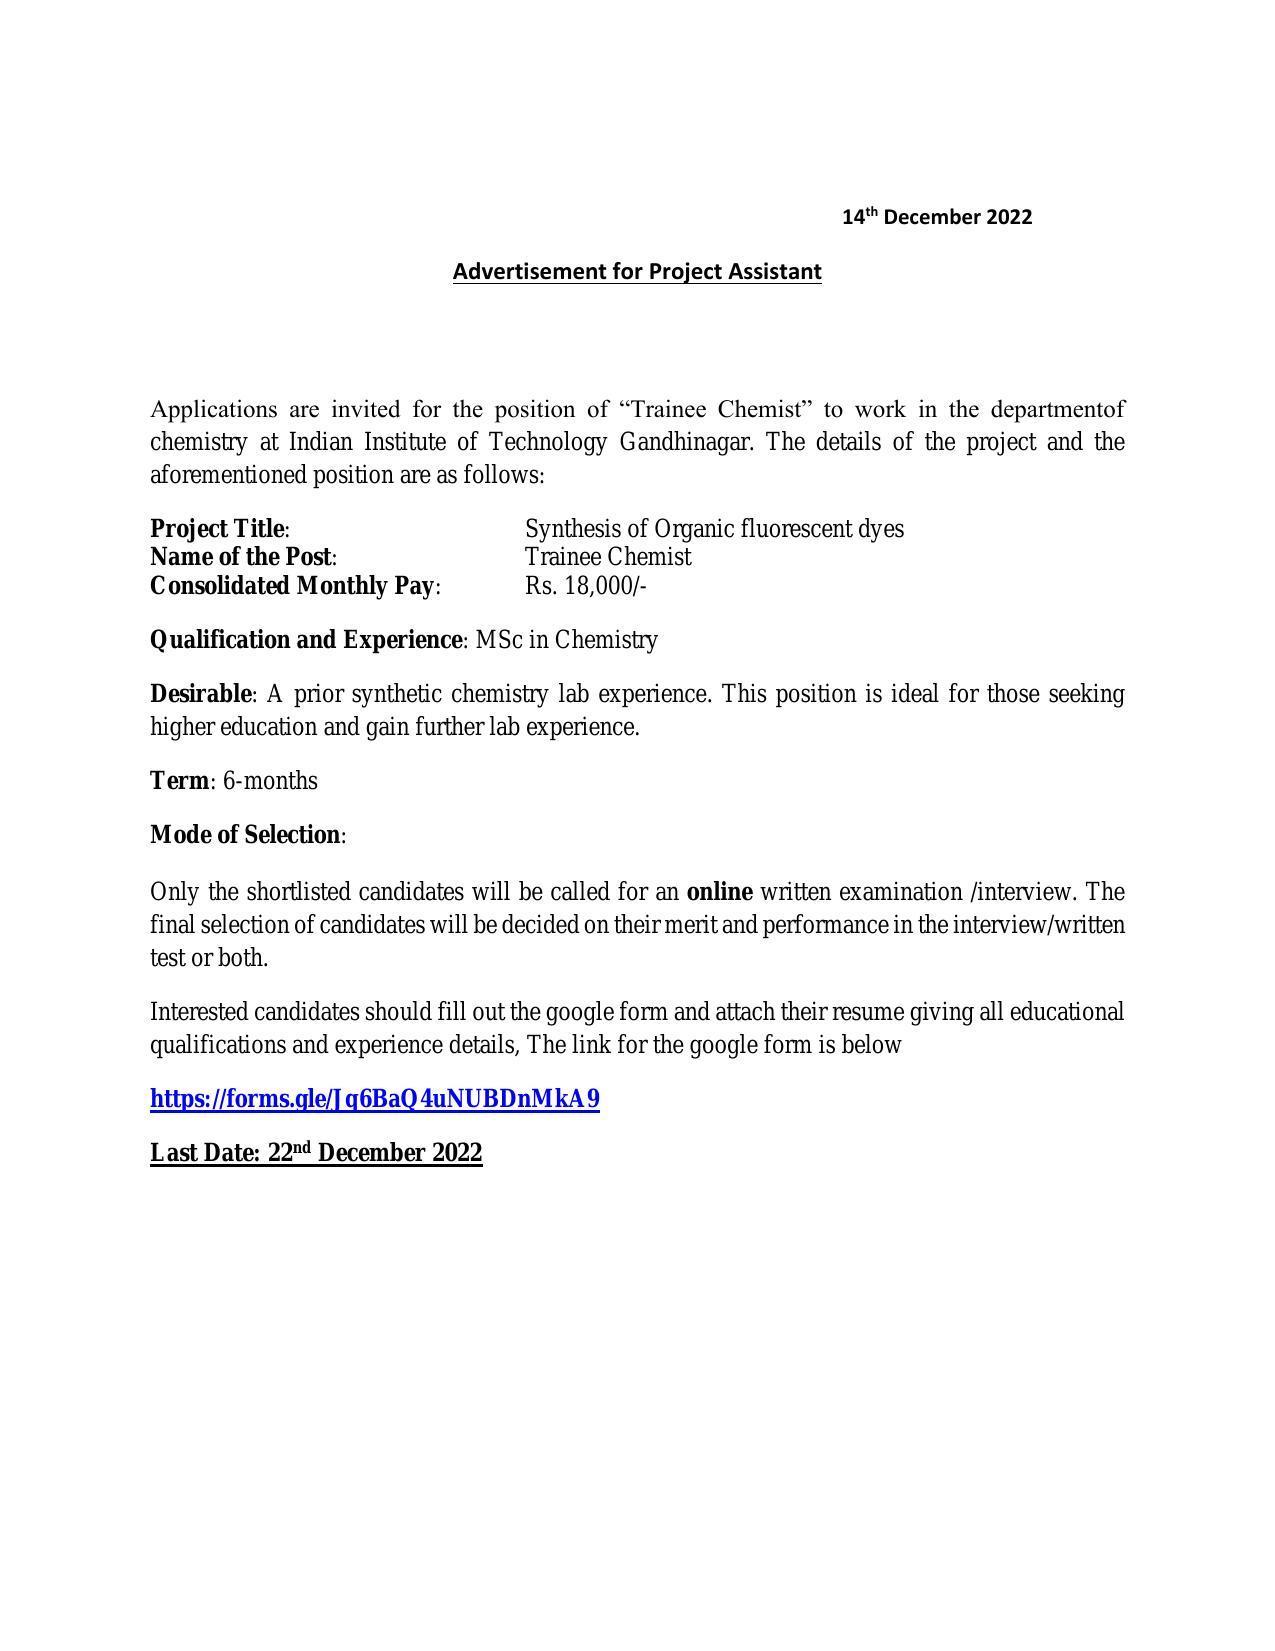 IIT Gandhinagar Invites Application for Trainee Chemist Recruitment 2022 - Page 1